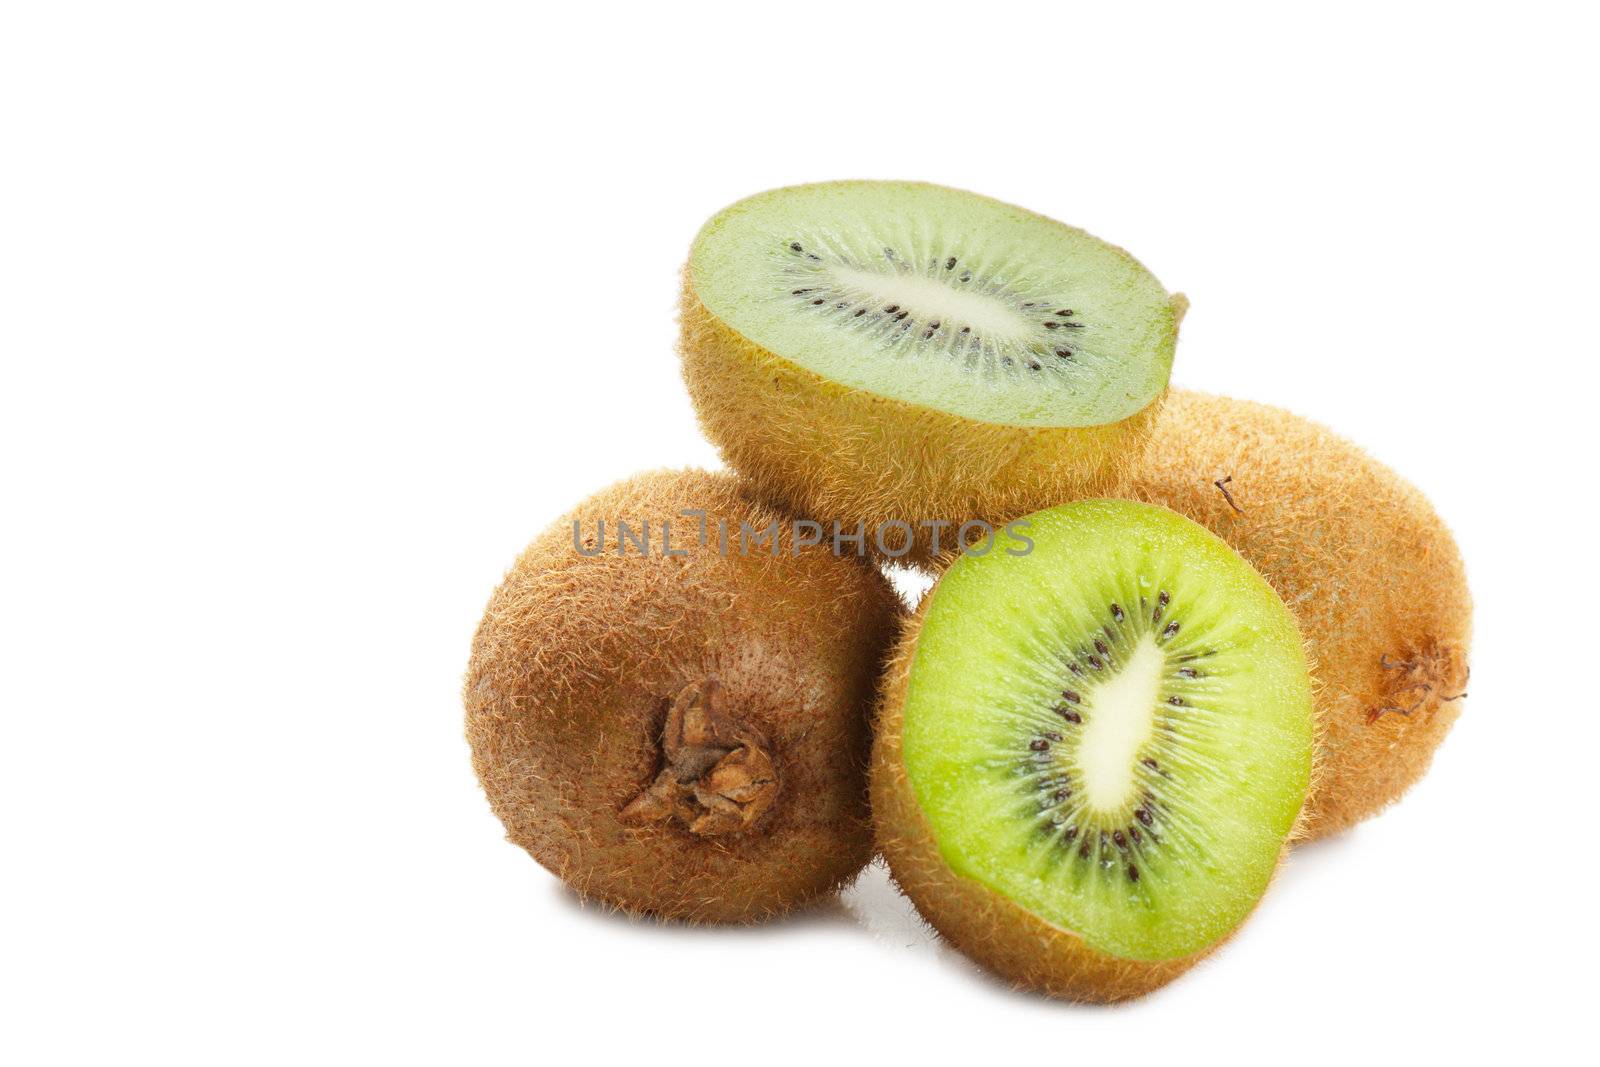 Closeup view of kiwi fruits over white background